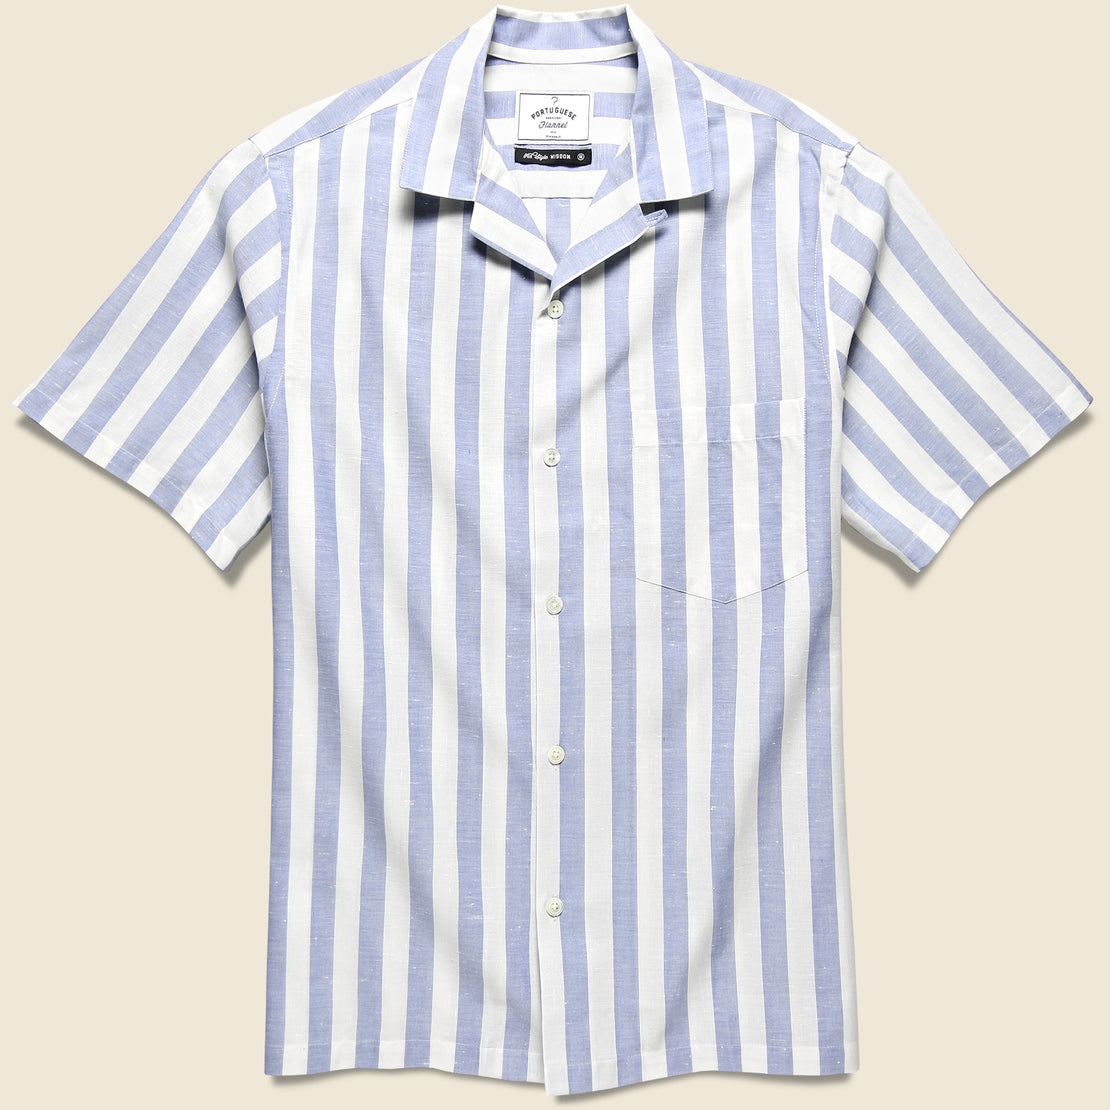 Portuguese Flannel Bayon Donegal Stripe Shirt - Light Blue/White